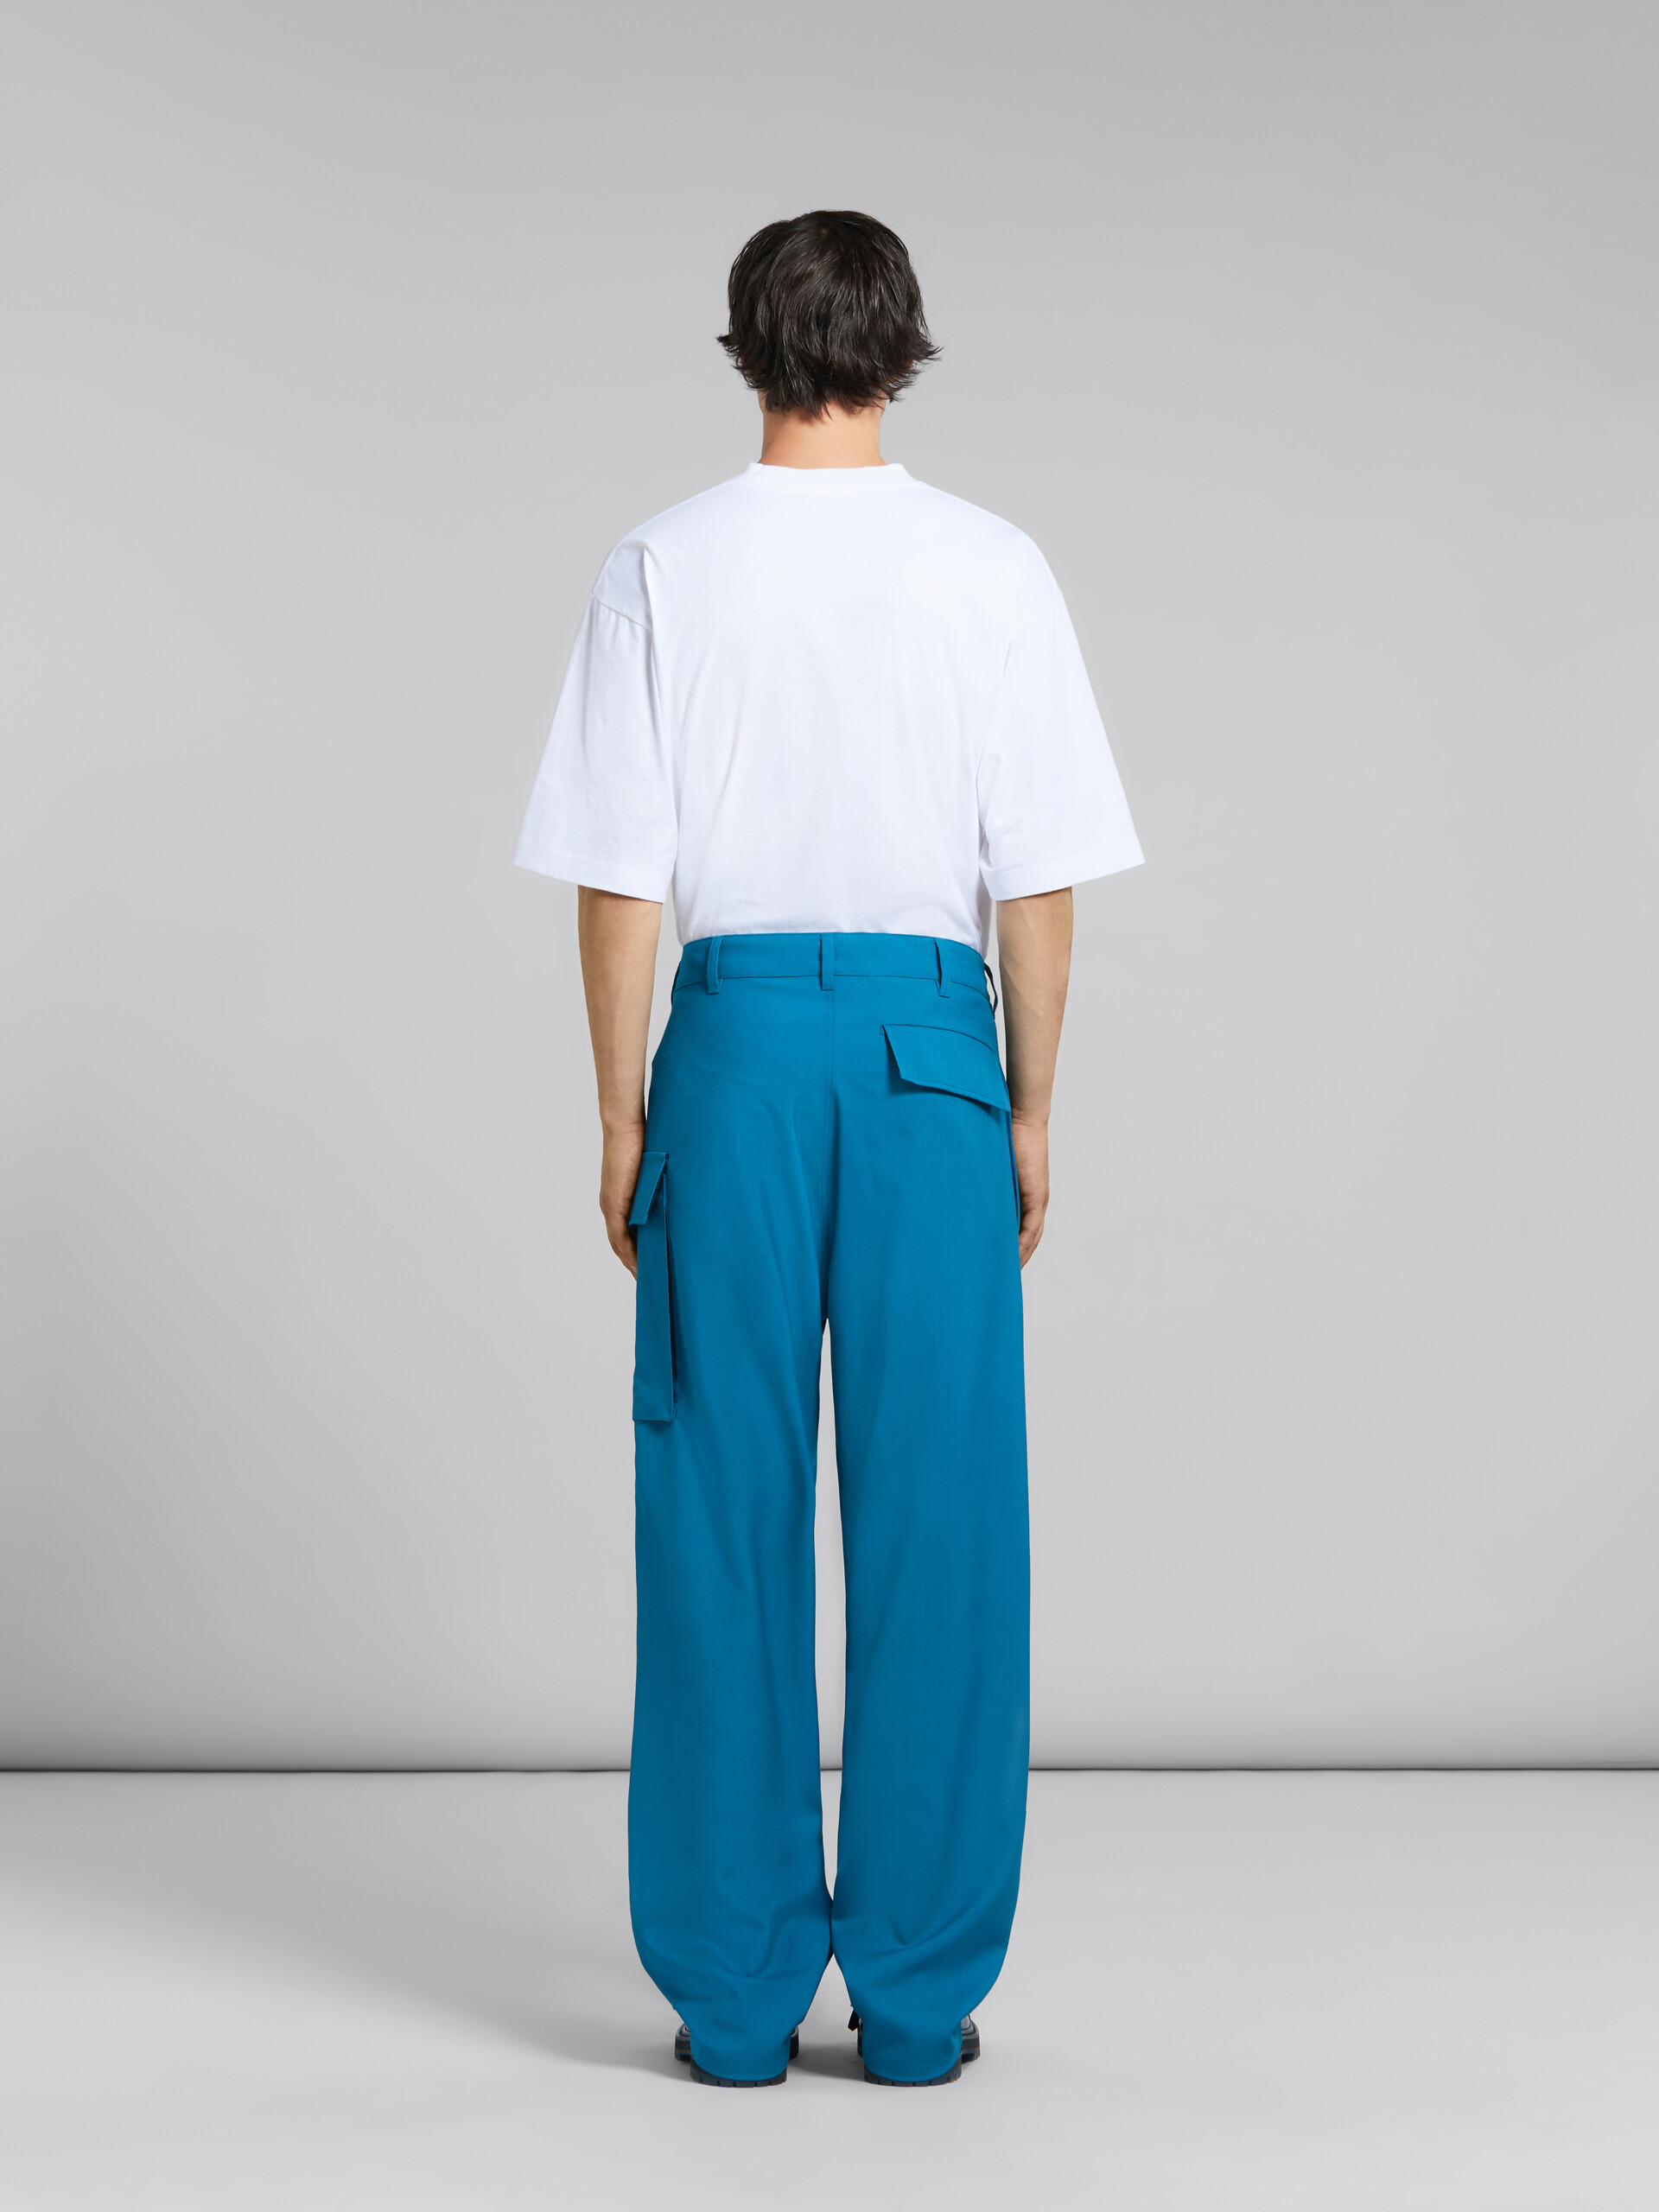 Pantaloni in fresco lana blu petrolio con tasche cargo - Pantaloni - Image 3